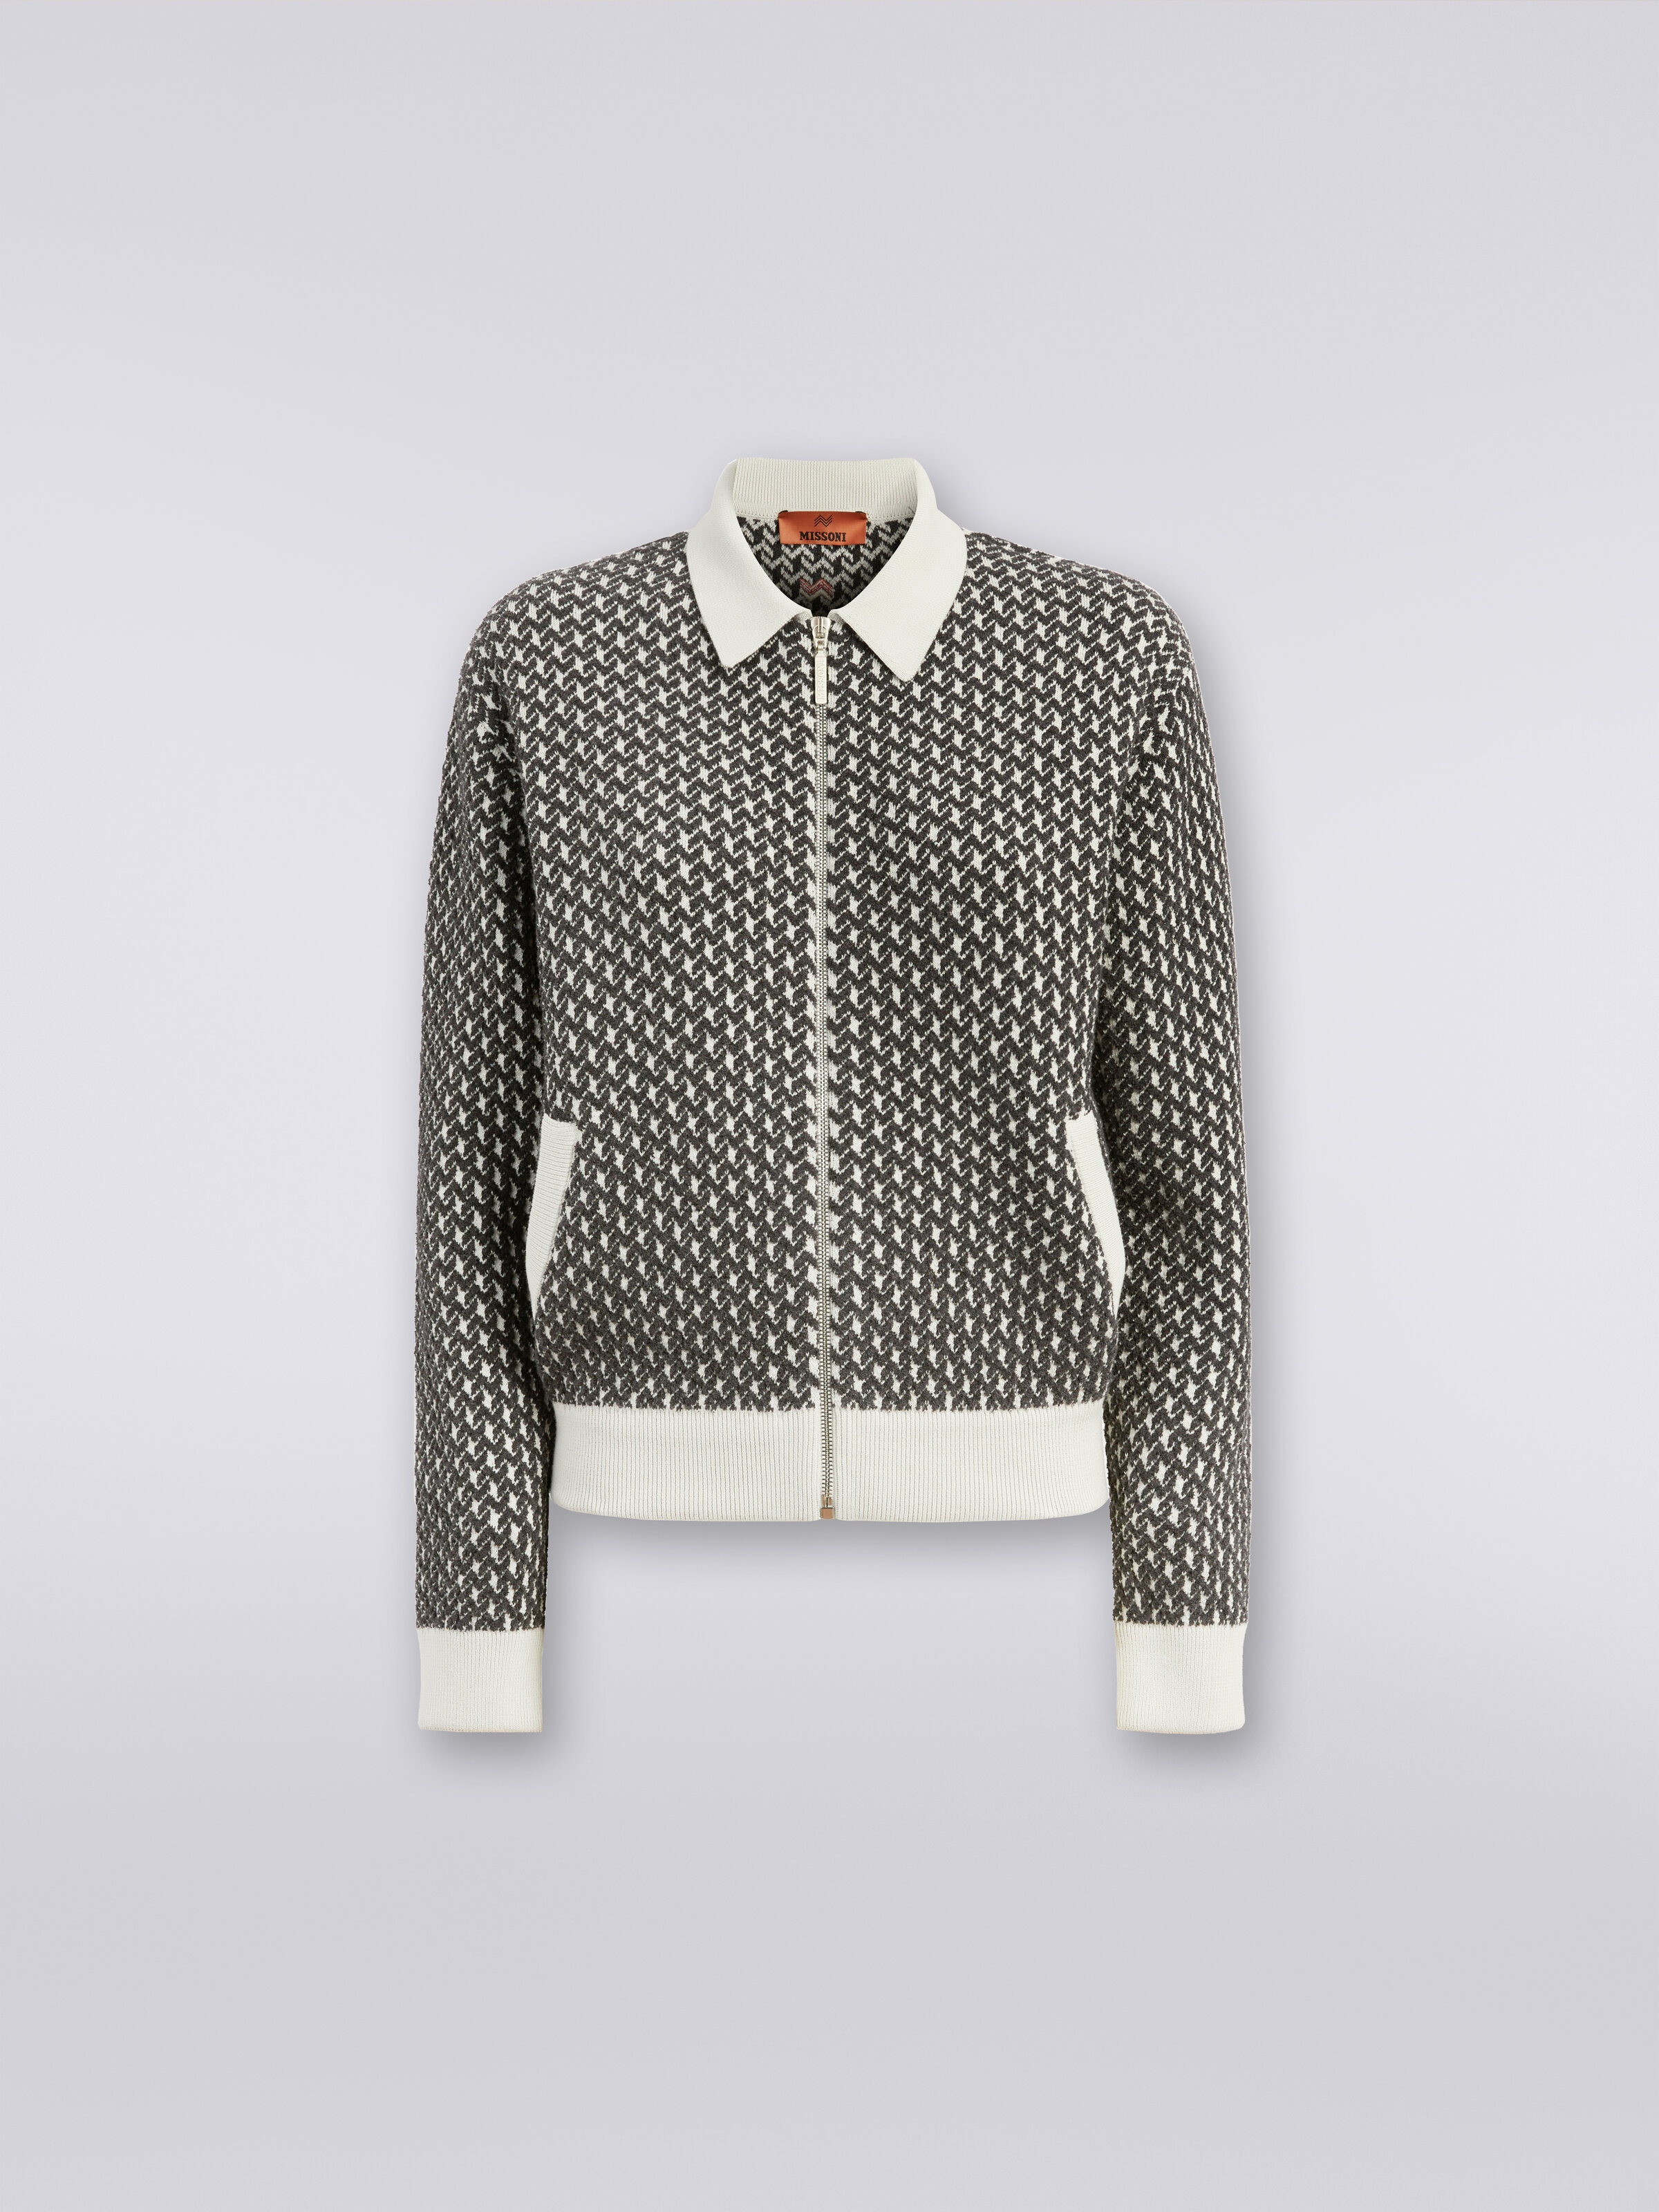 Cotton and nylon zipped bomber jacket, White & Grey - 0